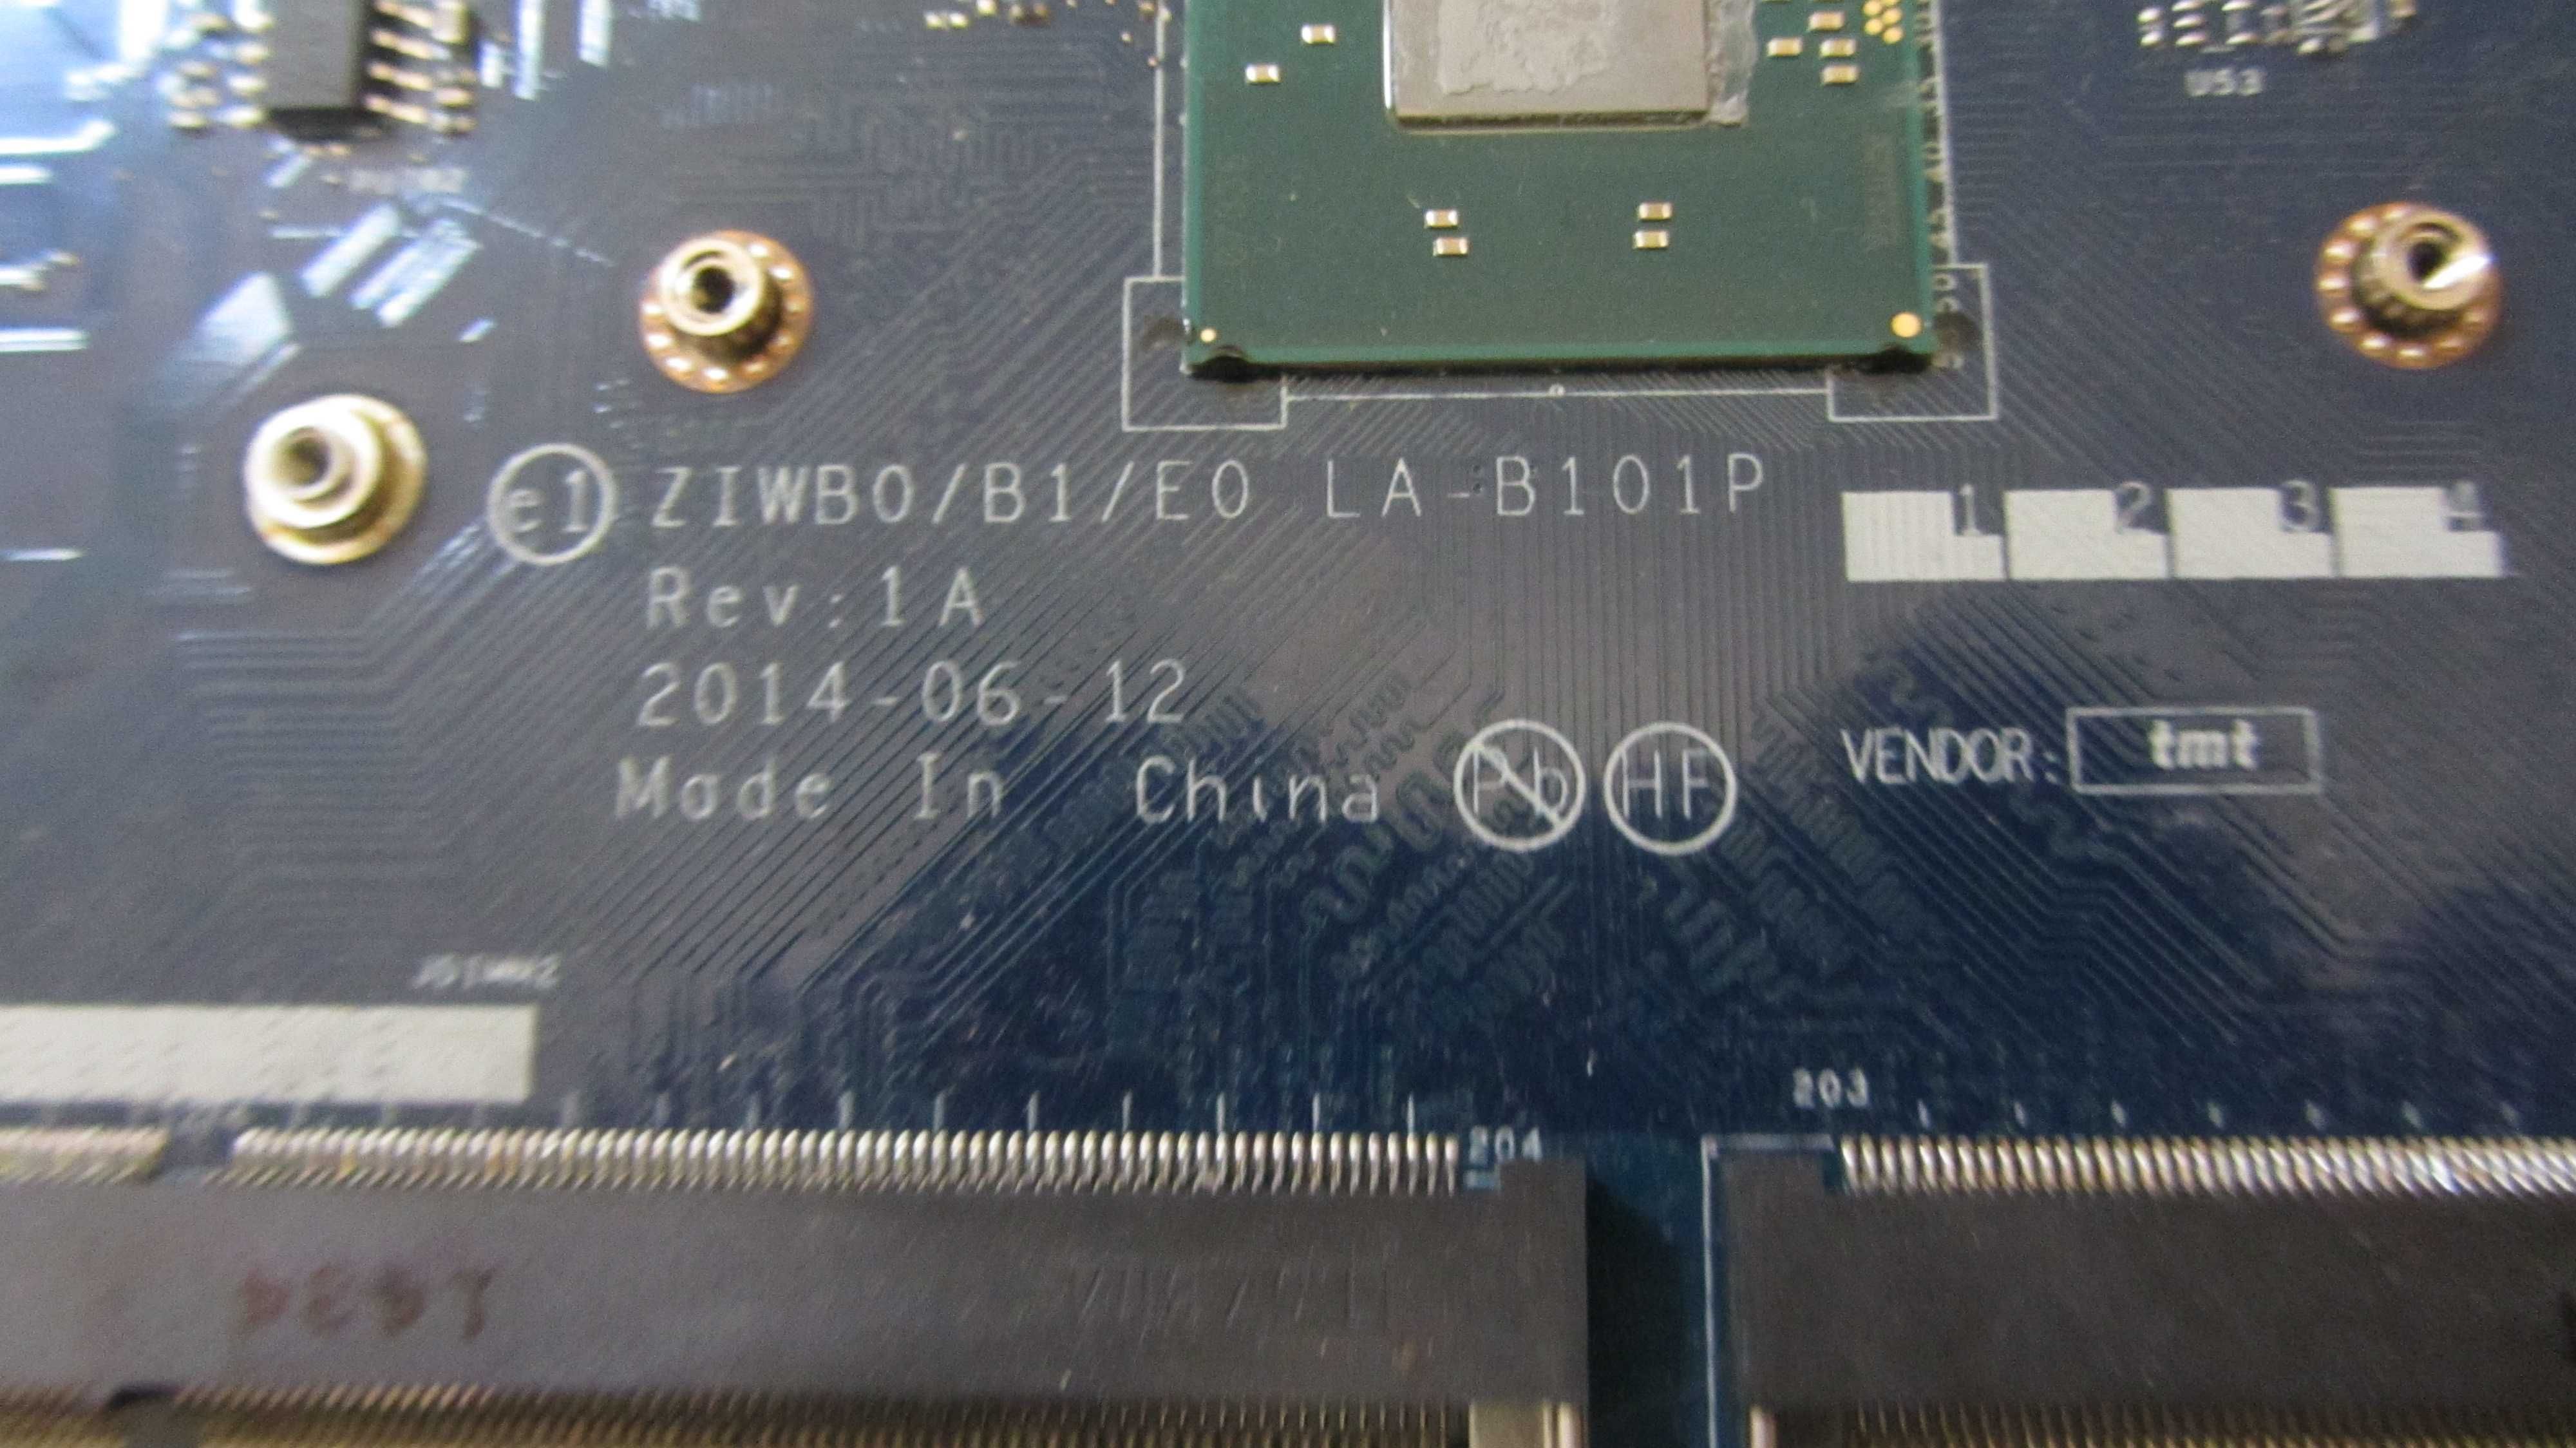 MB для ноутбука Lenovo. Ziwbo B1 E0 LA-B101P. Неробоча.